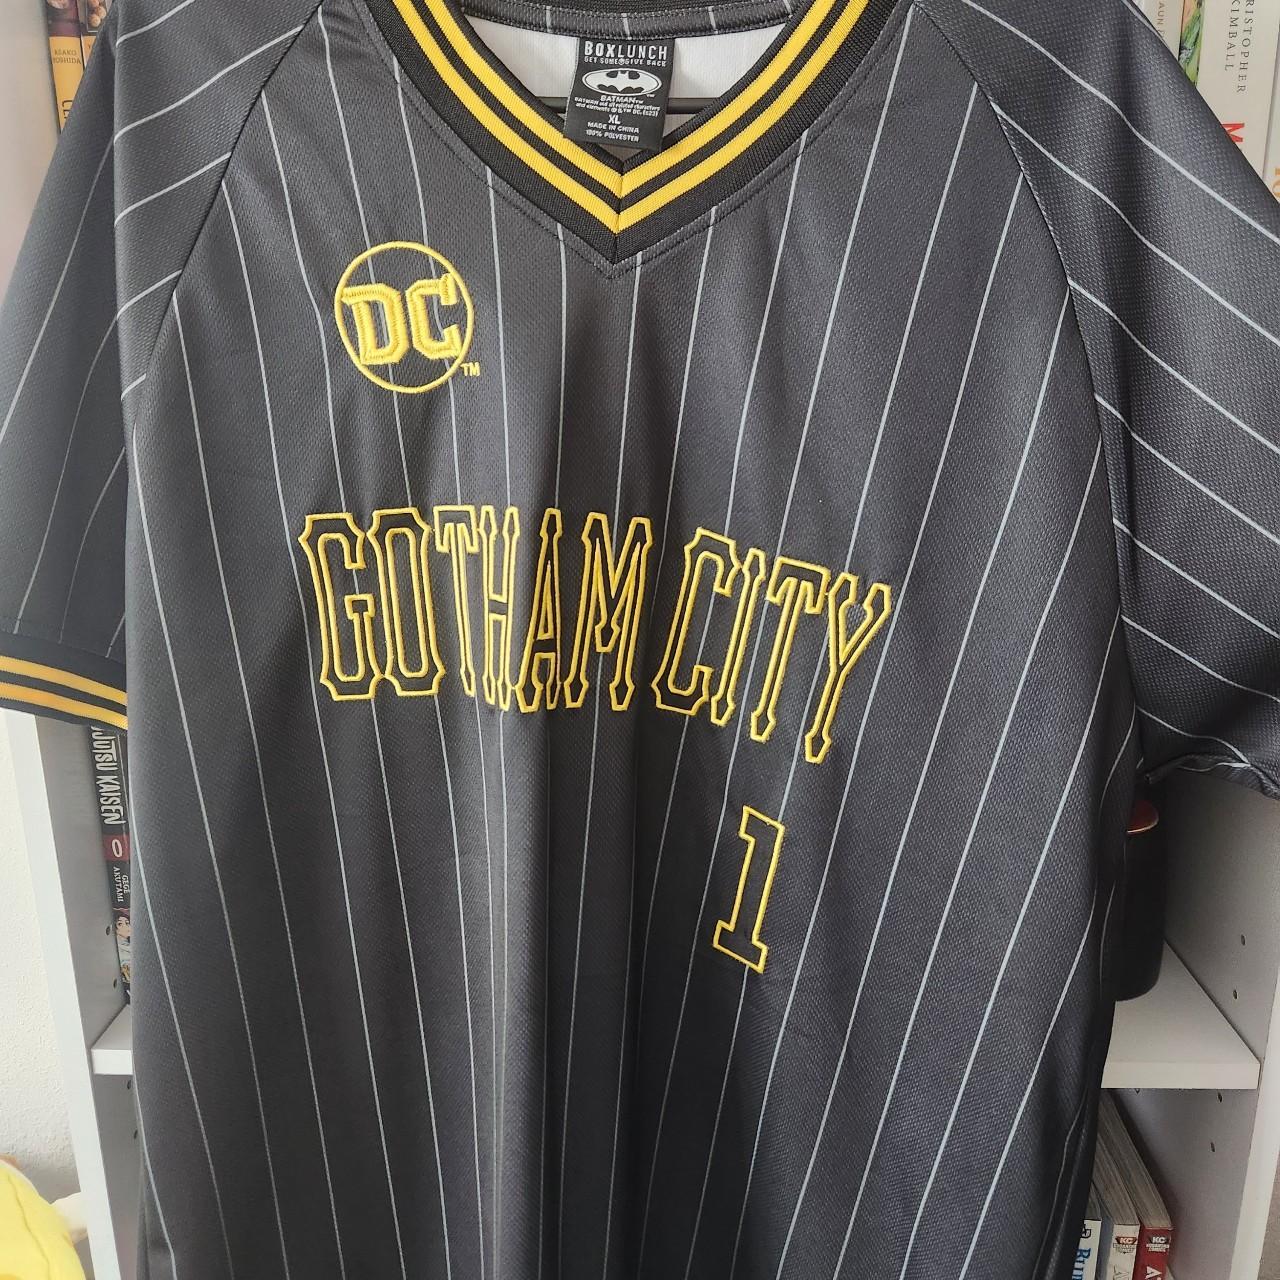 Batman Gotham City Jersey Jersey Is Brand New, Has - Depop